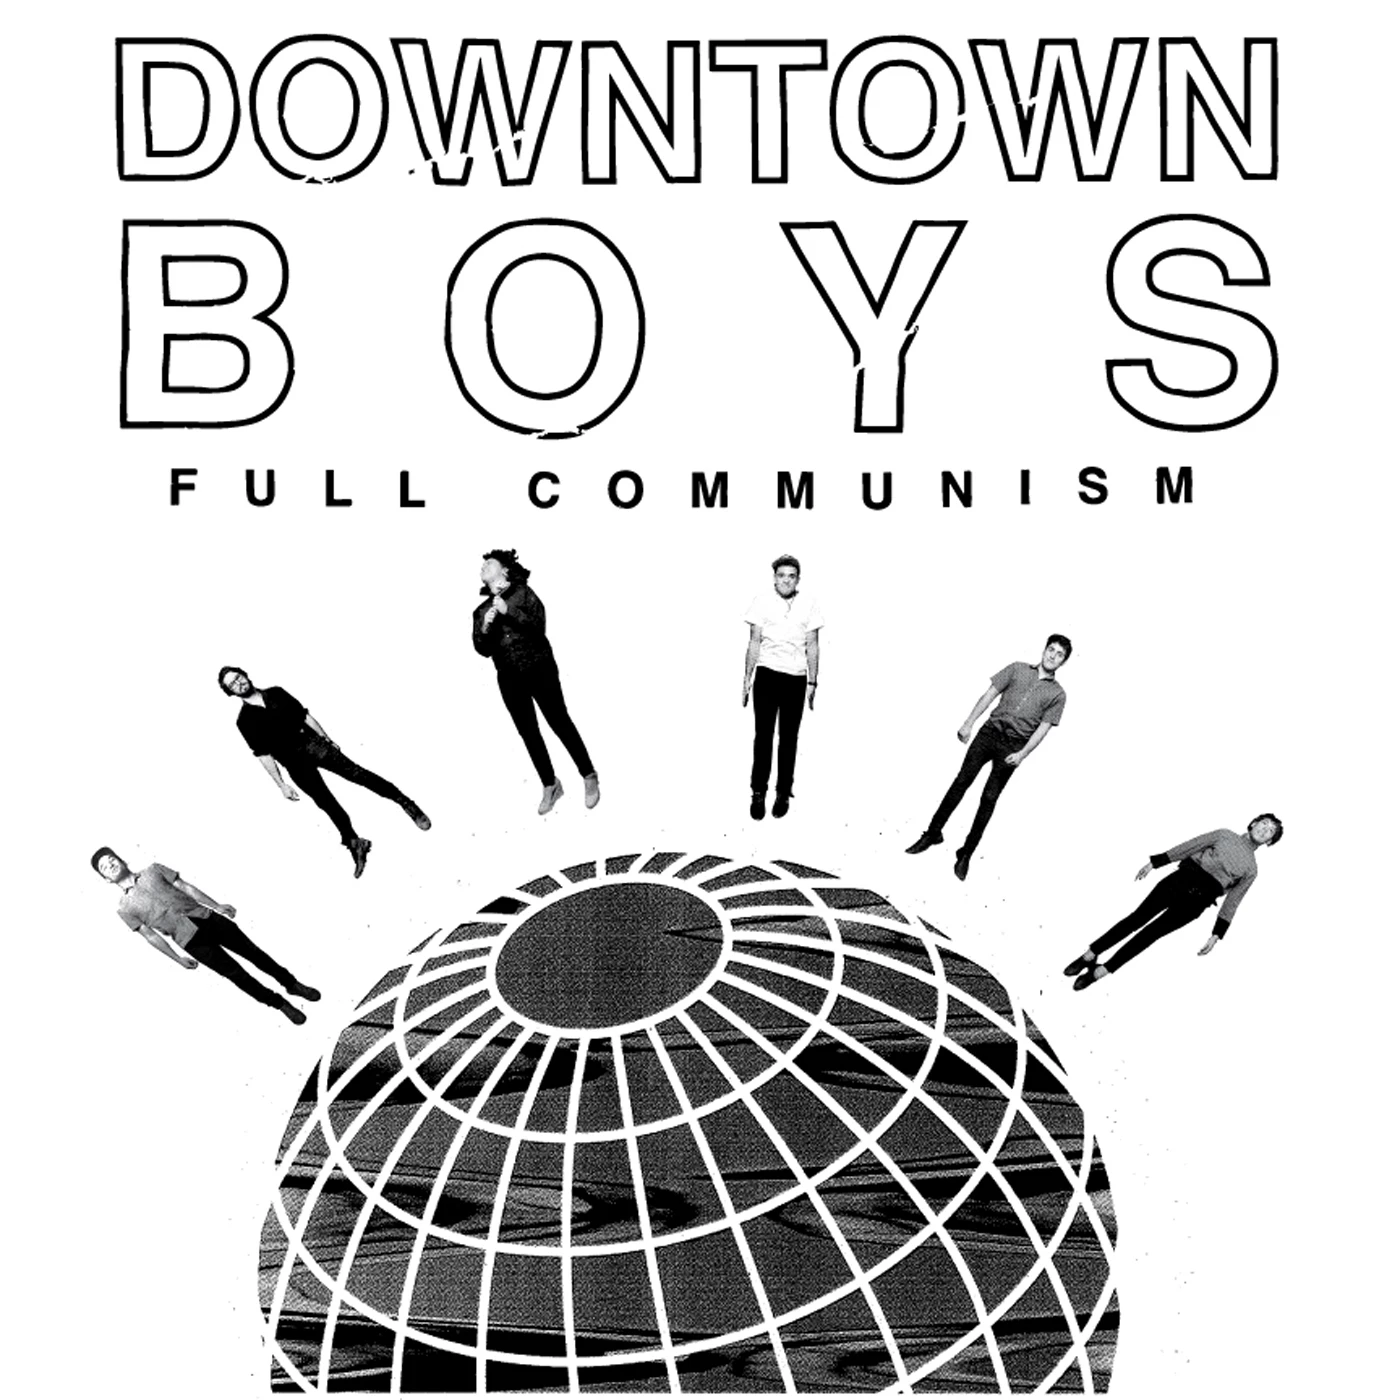 Downtown Boys Full Communism